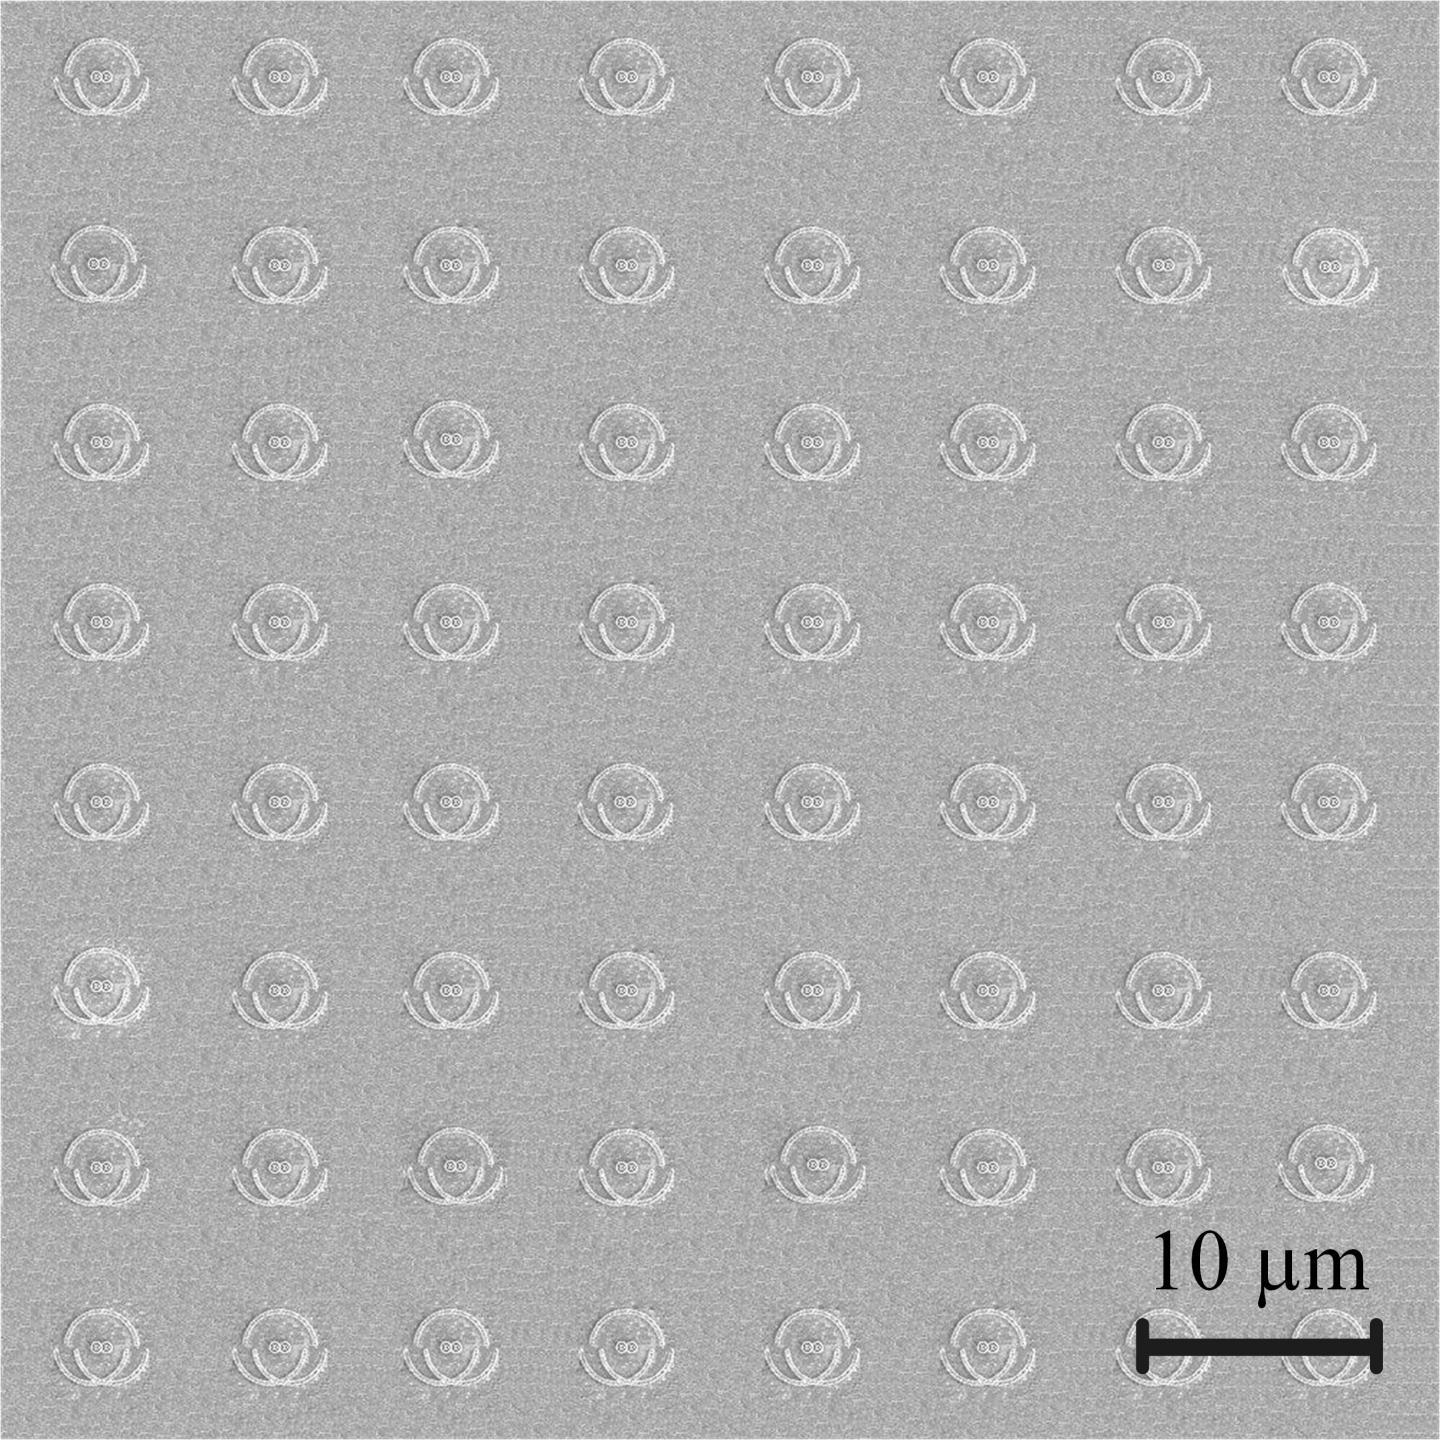 Nanophotonic Chip (Magnified)